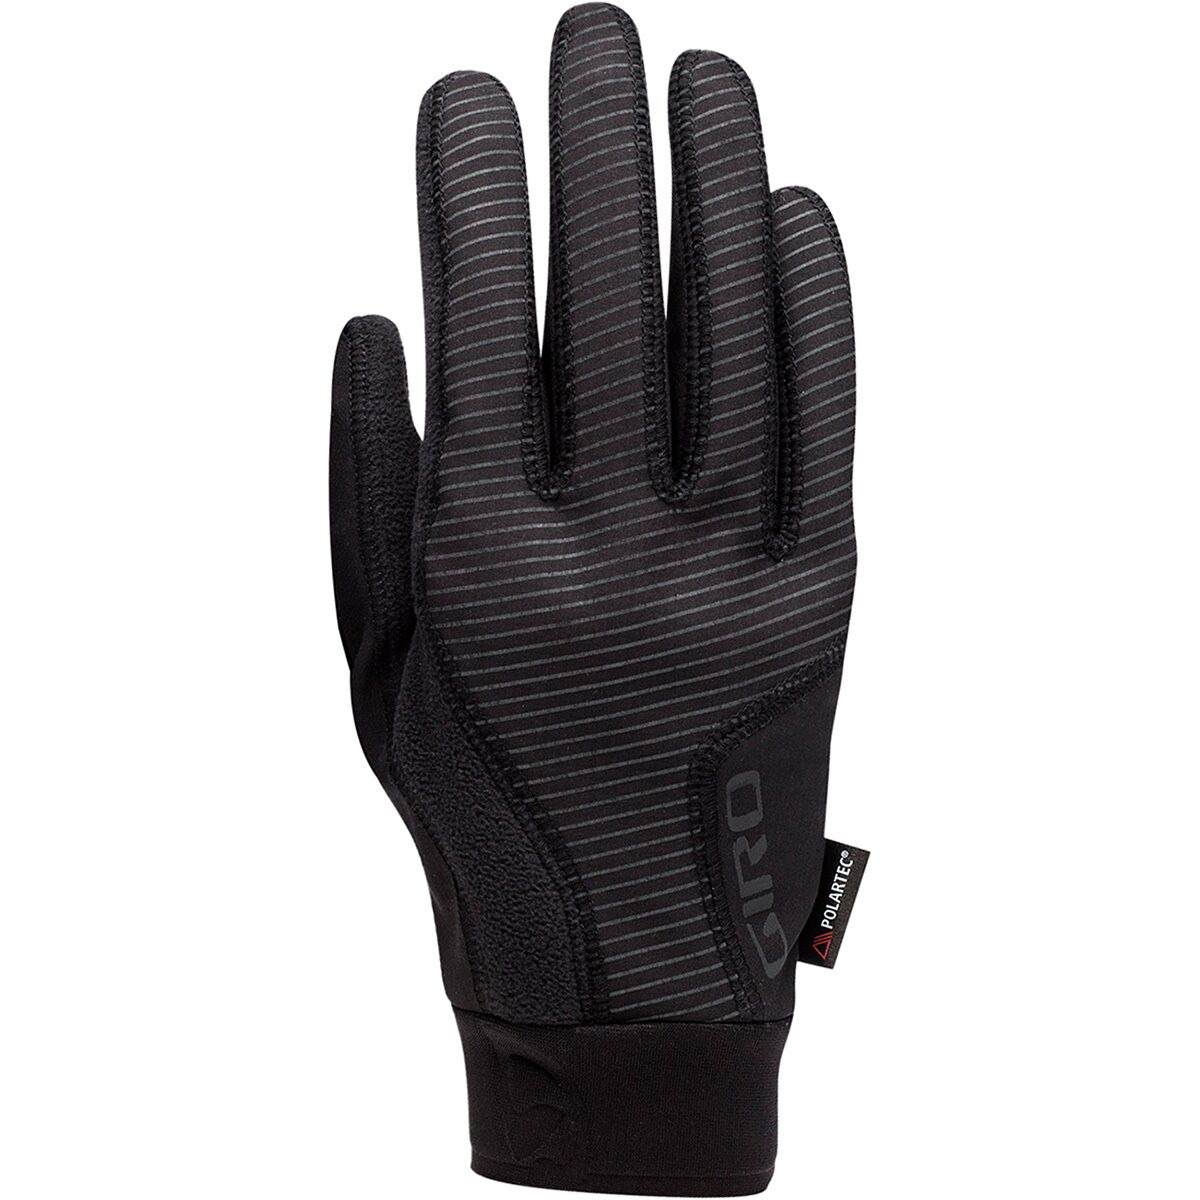 Giro Blaze II Glove - Men's